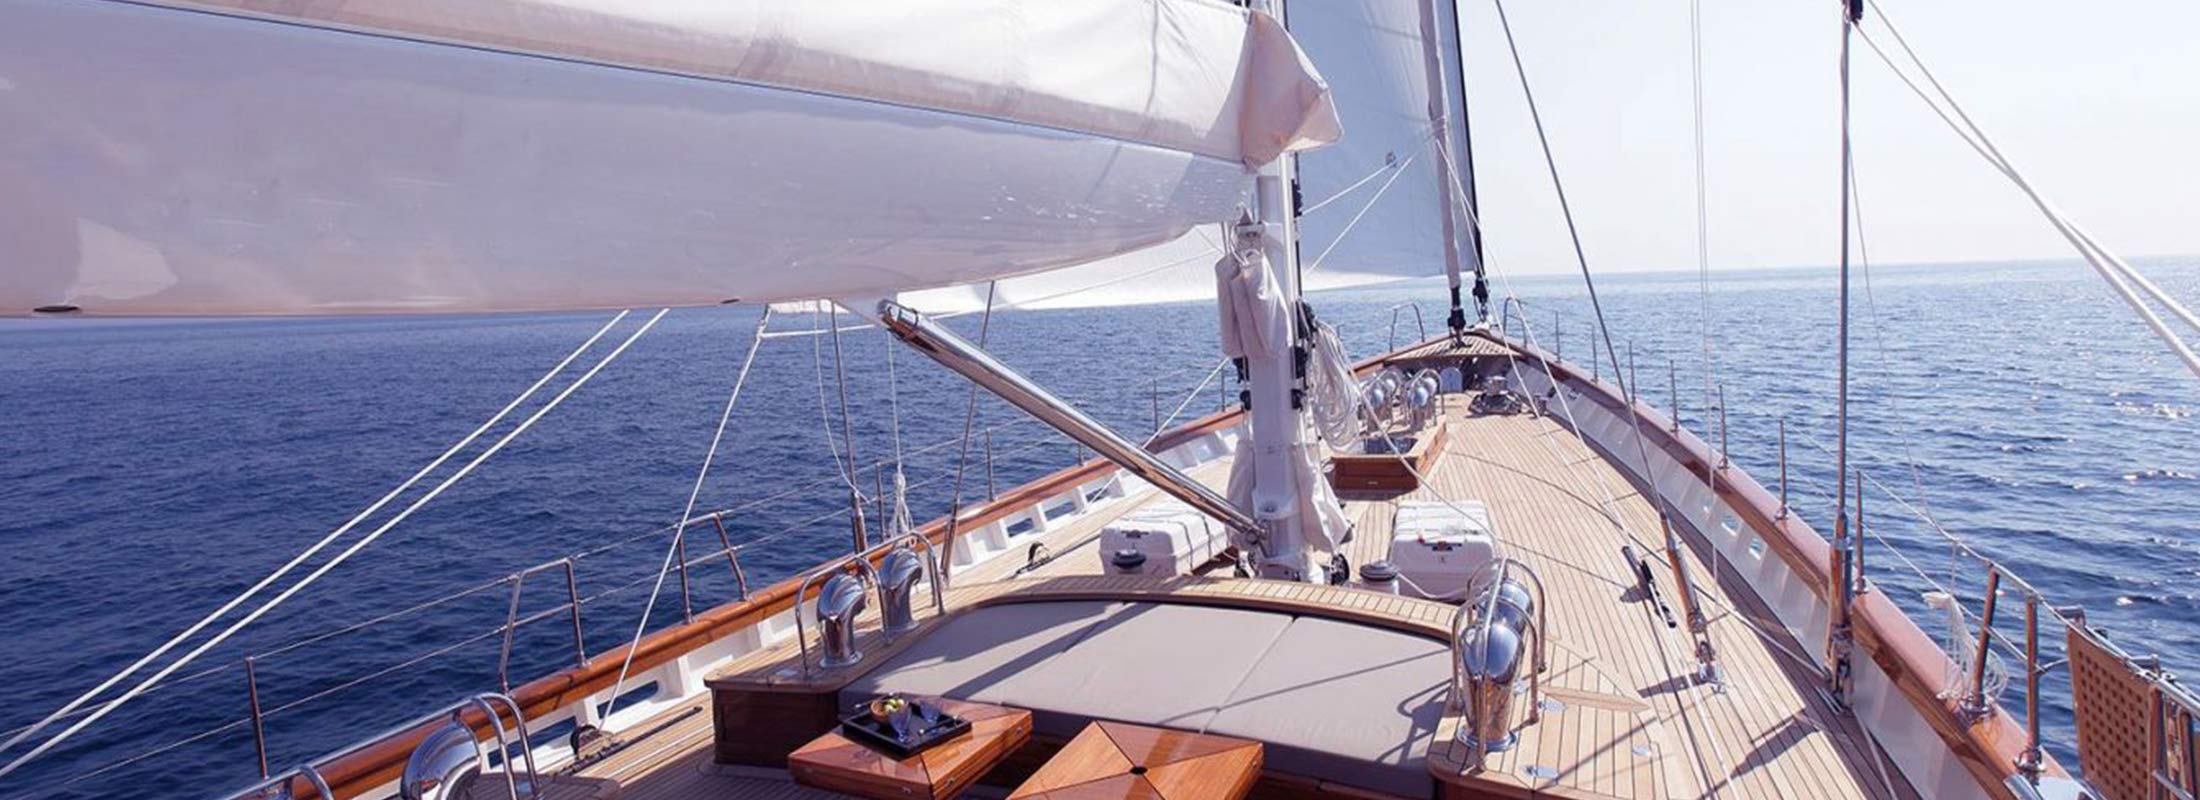 Vay Sailing Yacht for Charter Mediterranean slider 2